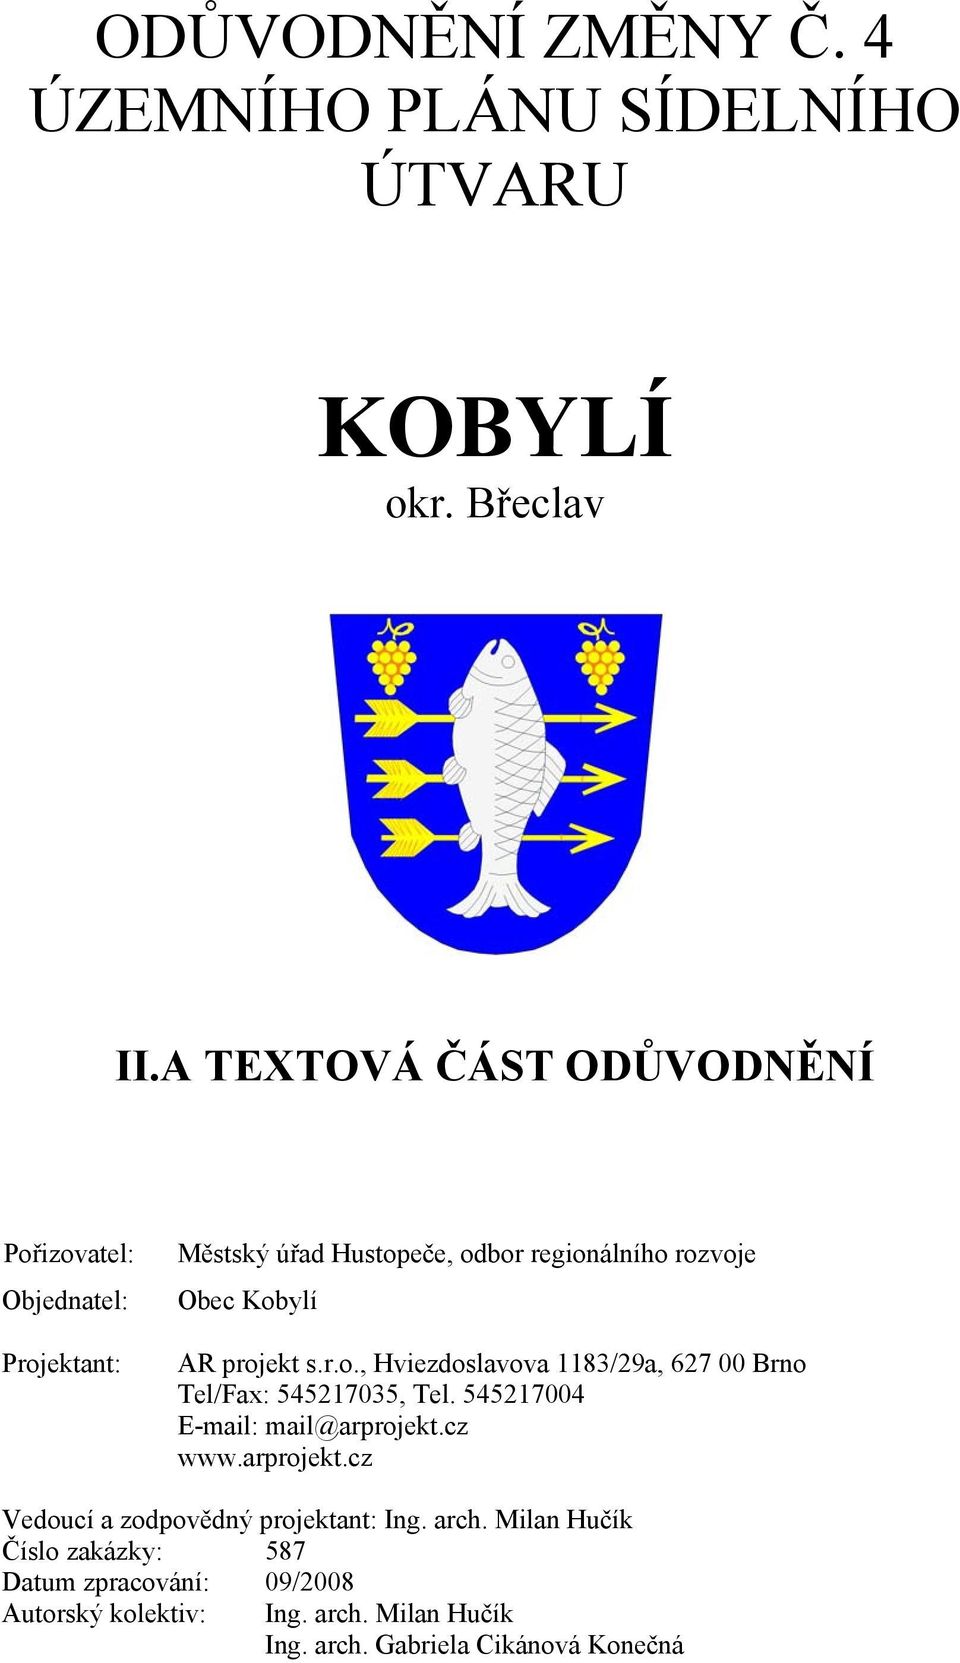 Kobylí AR projekt s.r.o., Hviezdoslavova 1183/29a, 627 00 Brno Tel/Fax: 545217035, Tel. 545217004 www.arprojekt.